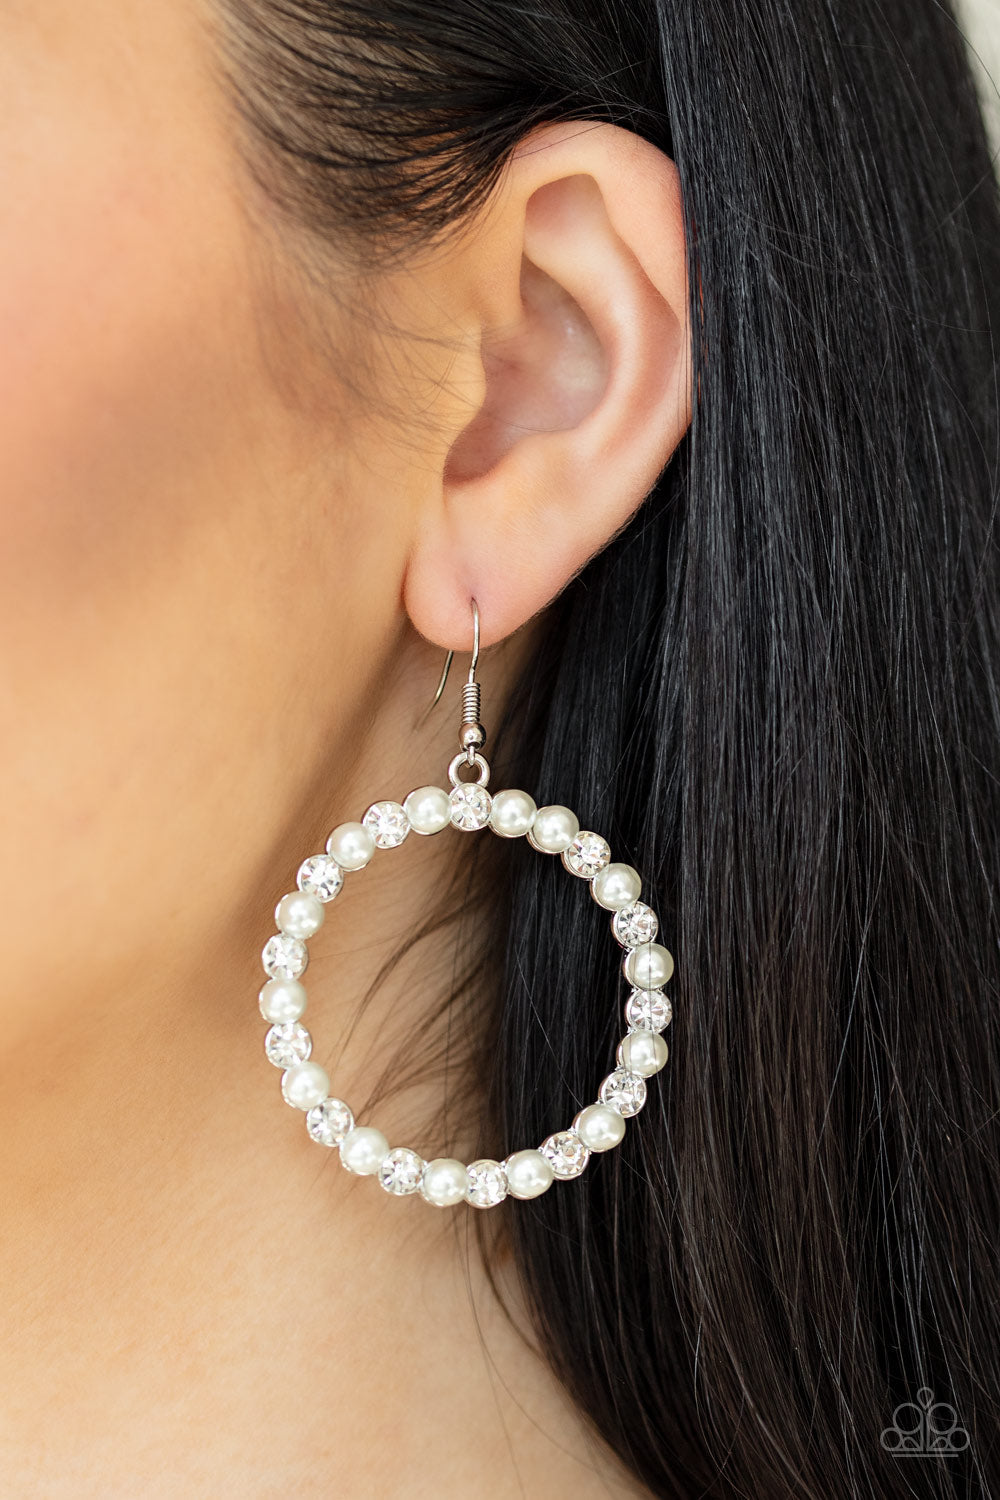 Paparazzi Pearl Palace - White Pearls & Rhinestones - Hoop Earrings - $5 Jewelry with Ashley Swint